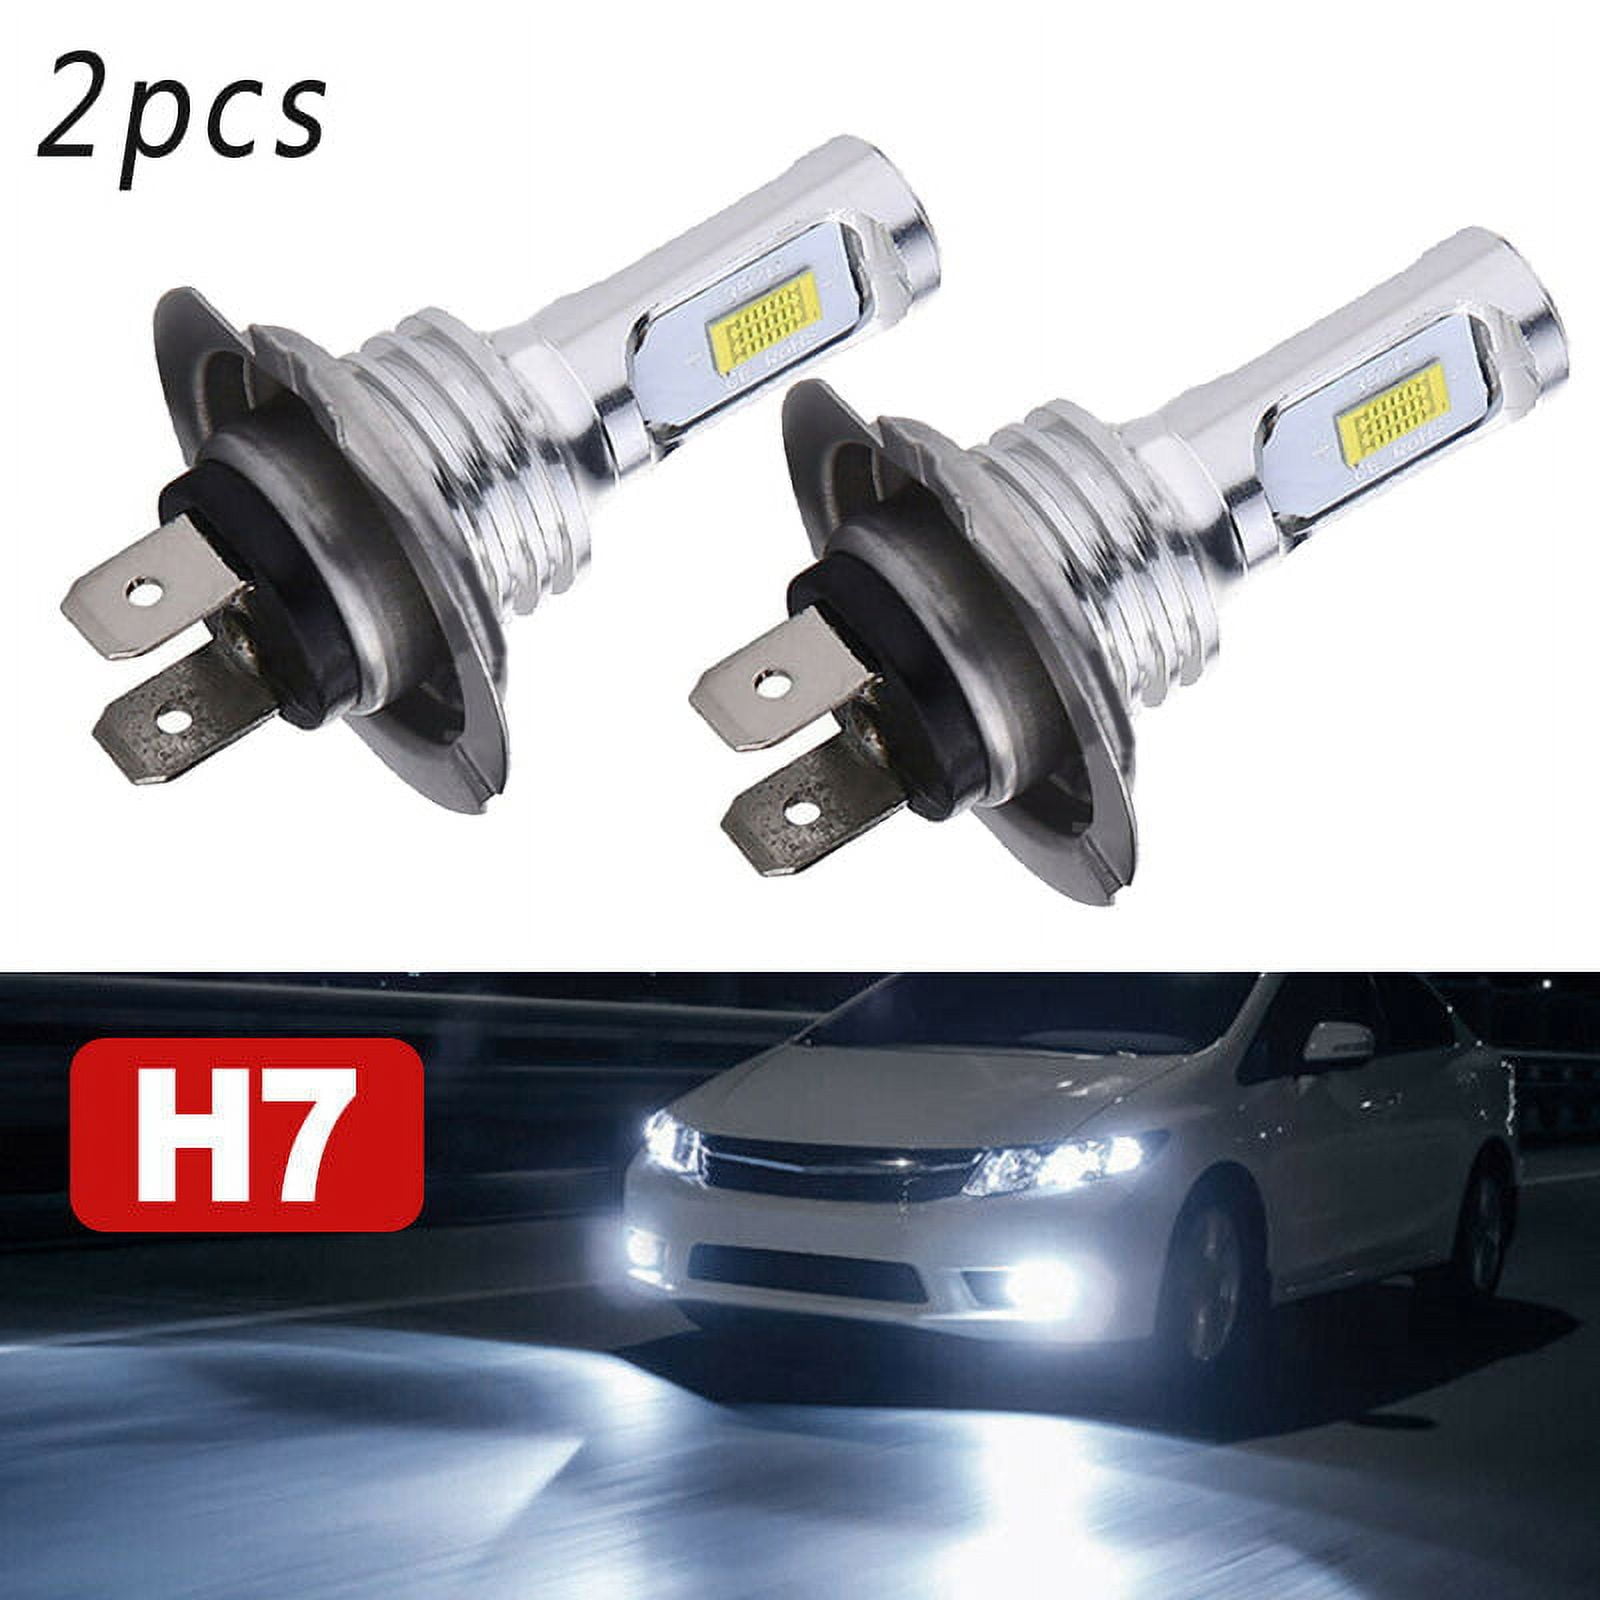 H7 /H7LL / H7-55W / 499 LED HEADLIGHT KIT